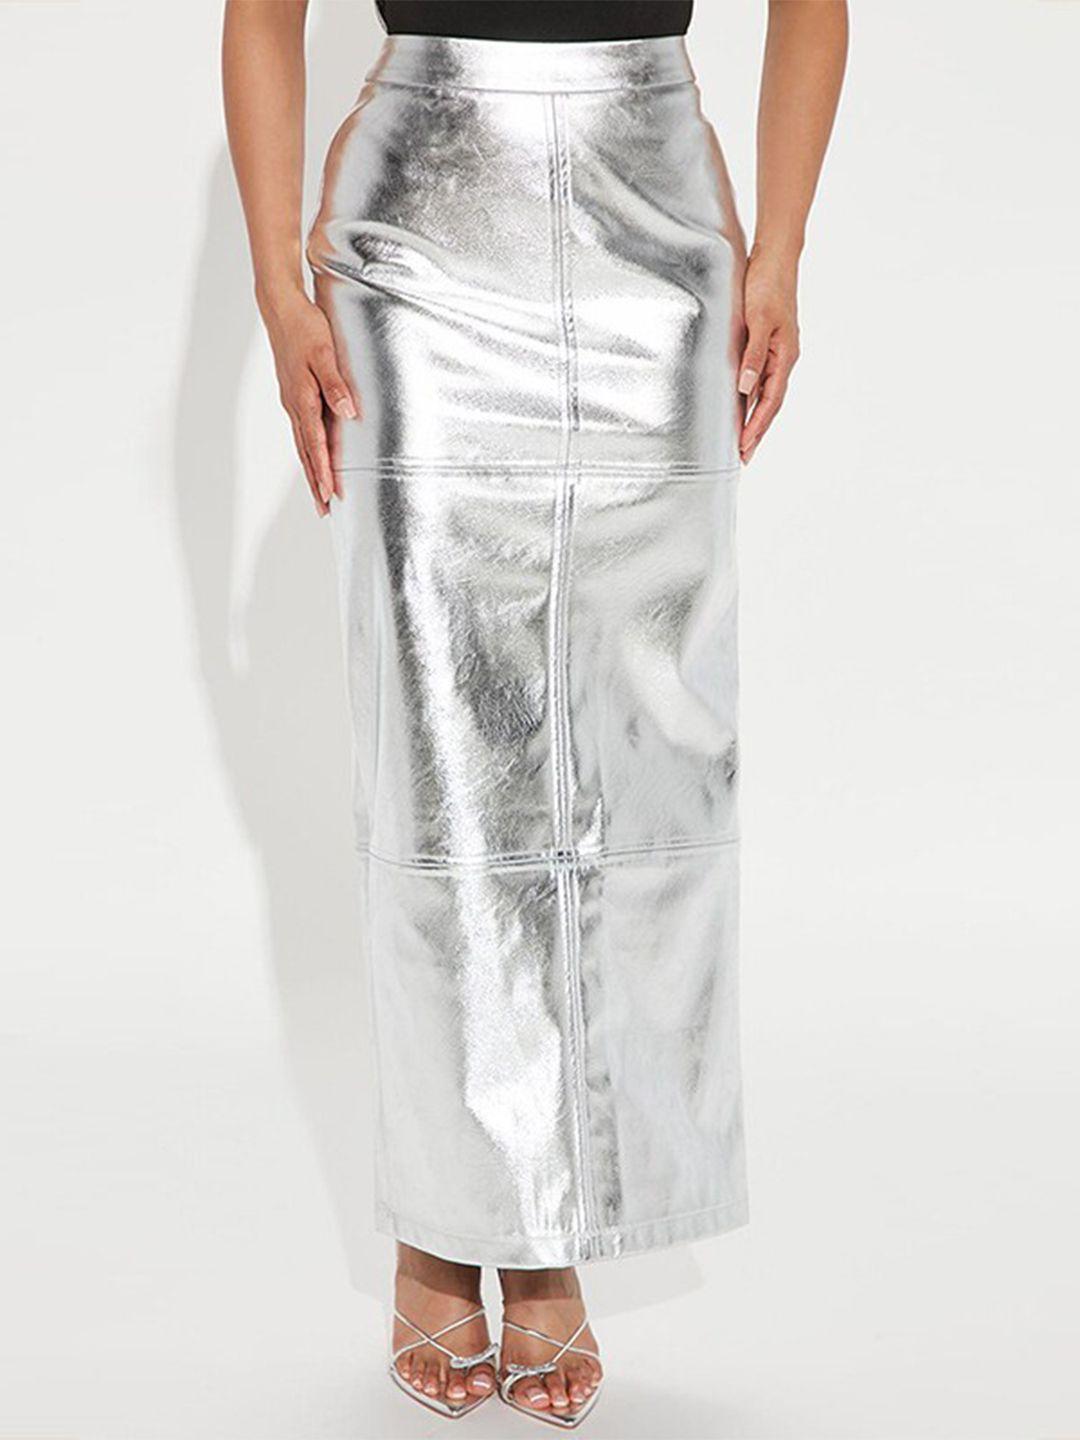 stylecast silver toned pencil midi skirt